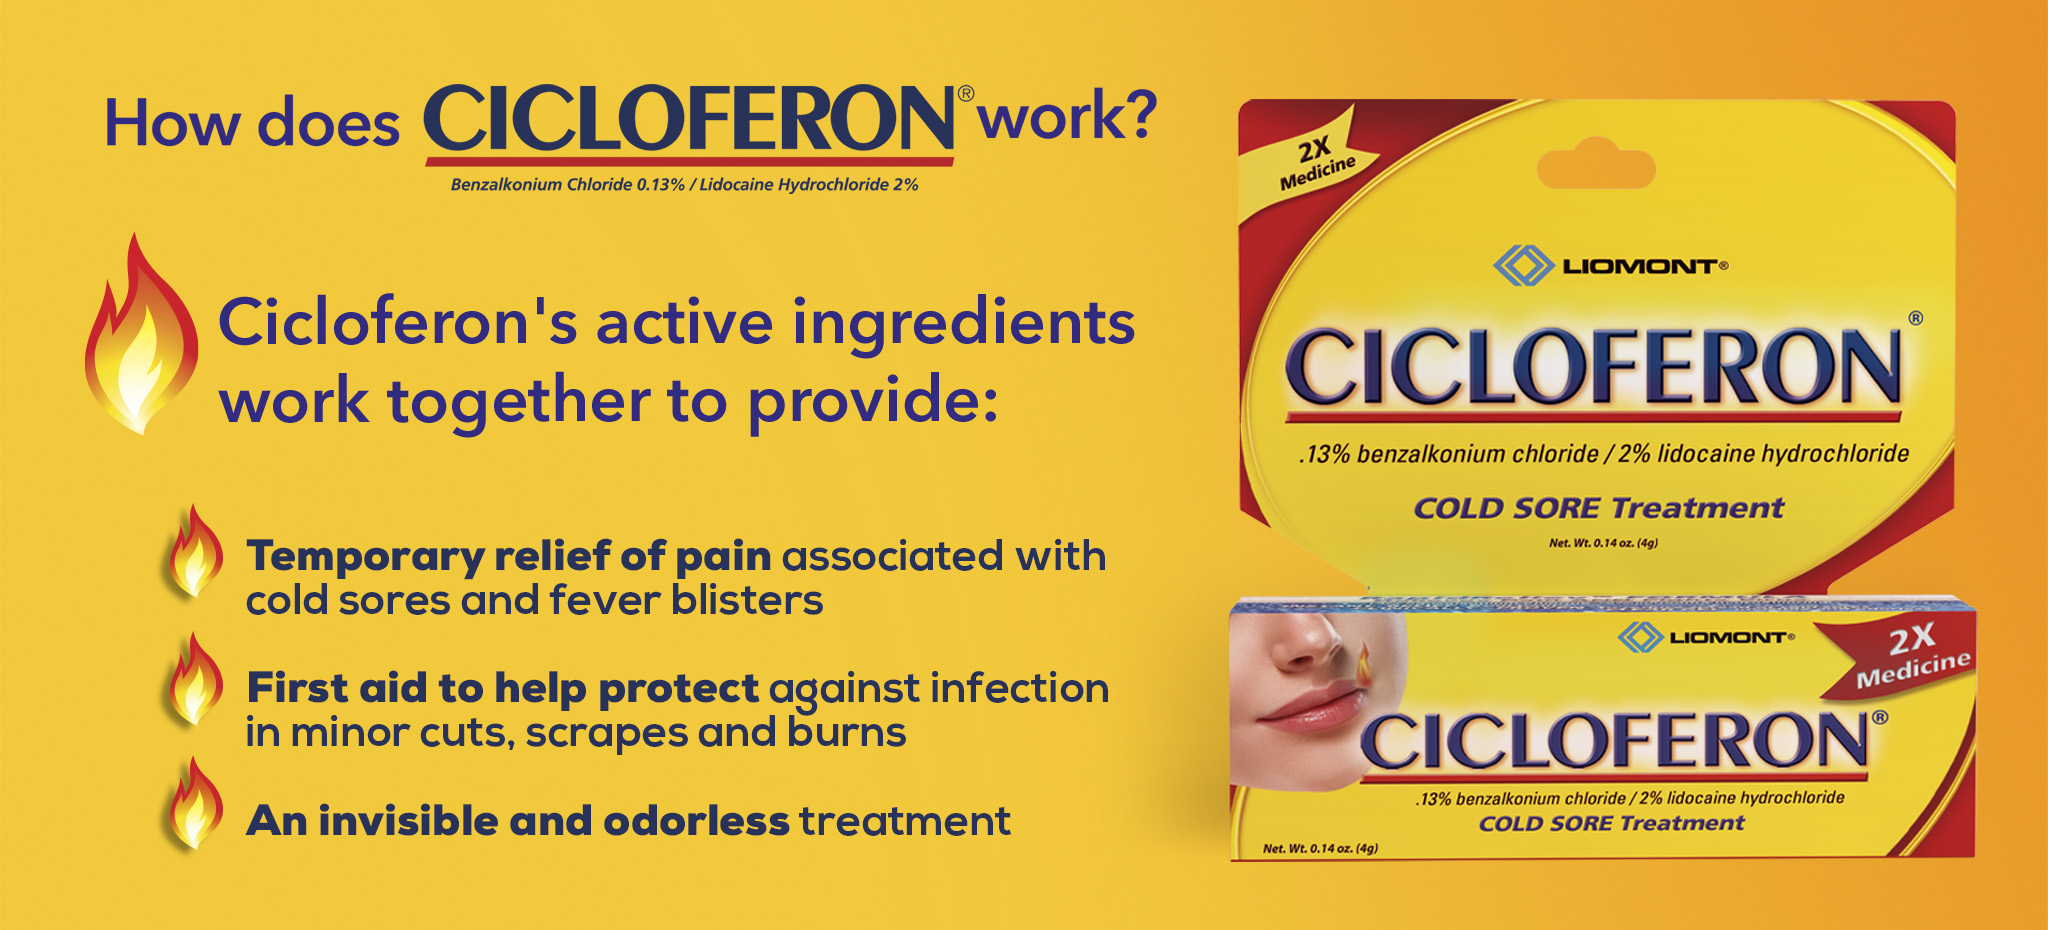 How works Cicloferon